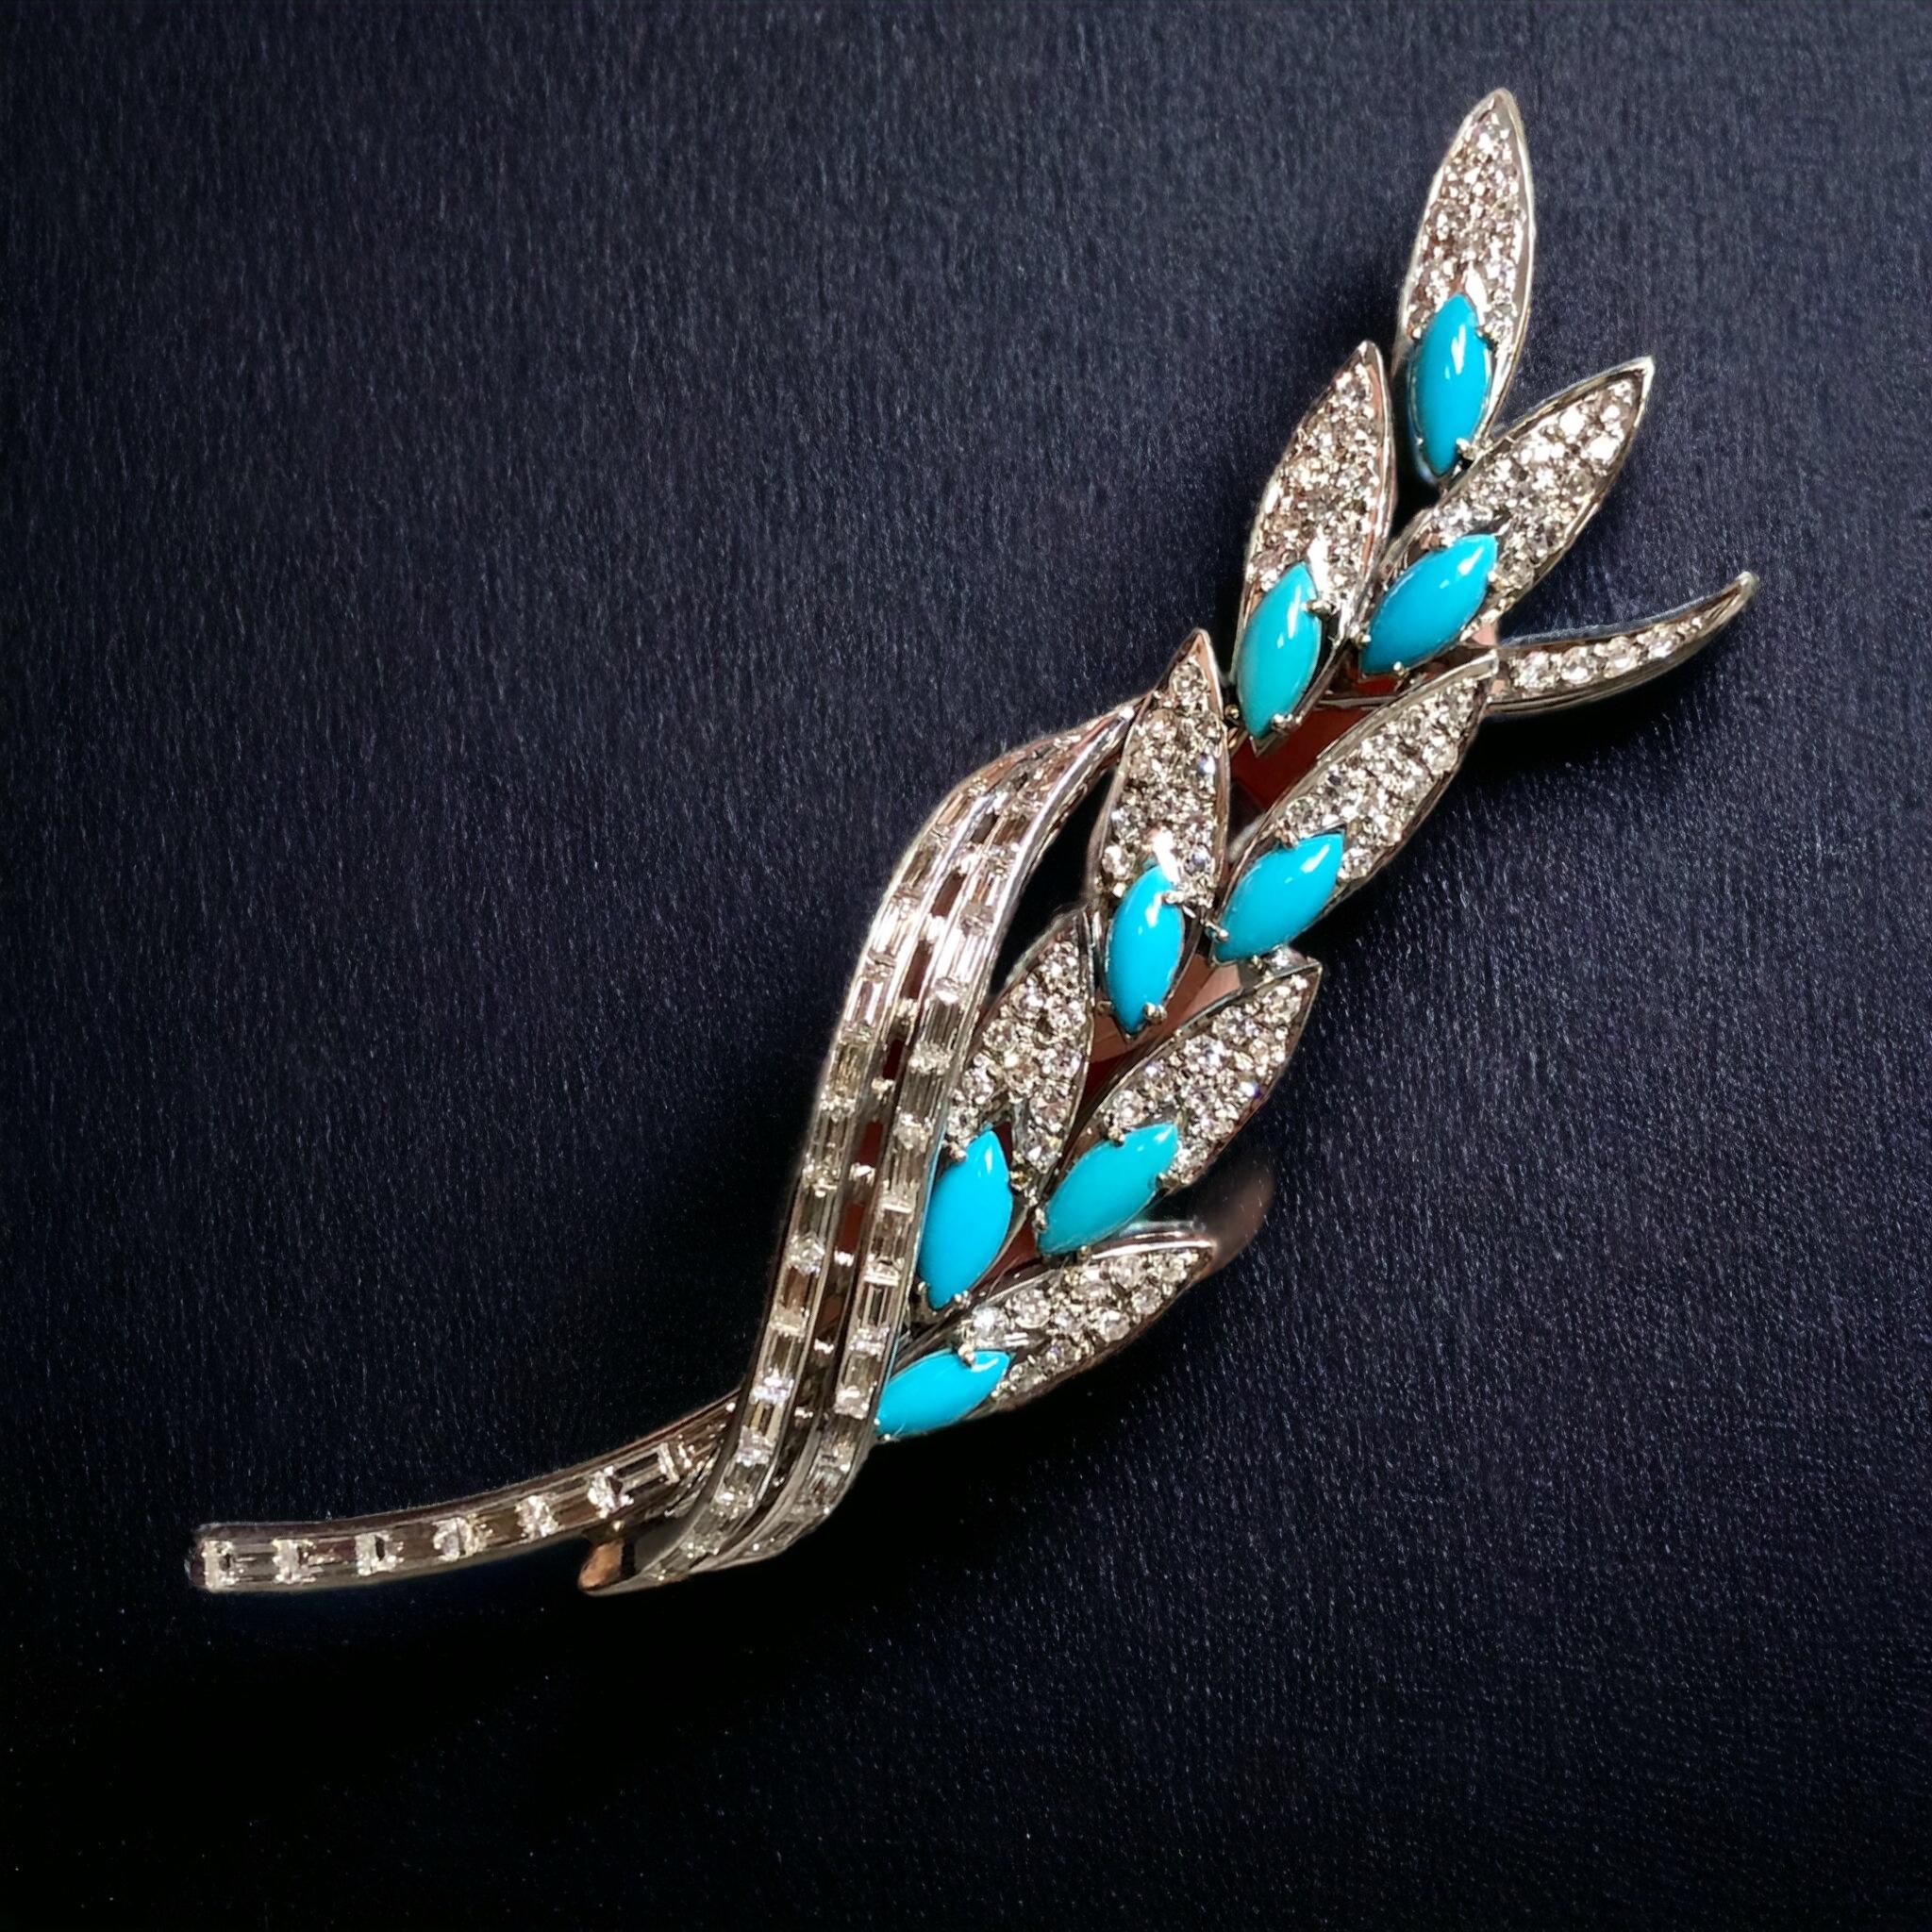 Vintage 18K Baguette Round Diamond Turquoise Leaf Brooch Pin Pendant 6.36cttw For Sale 5